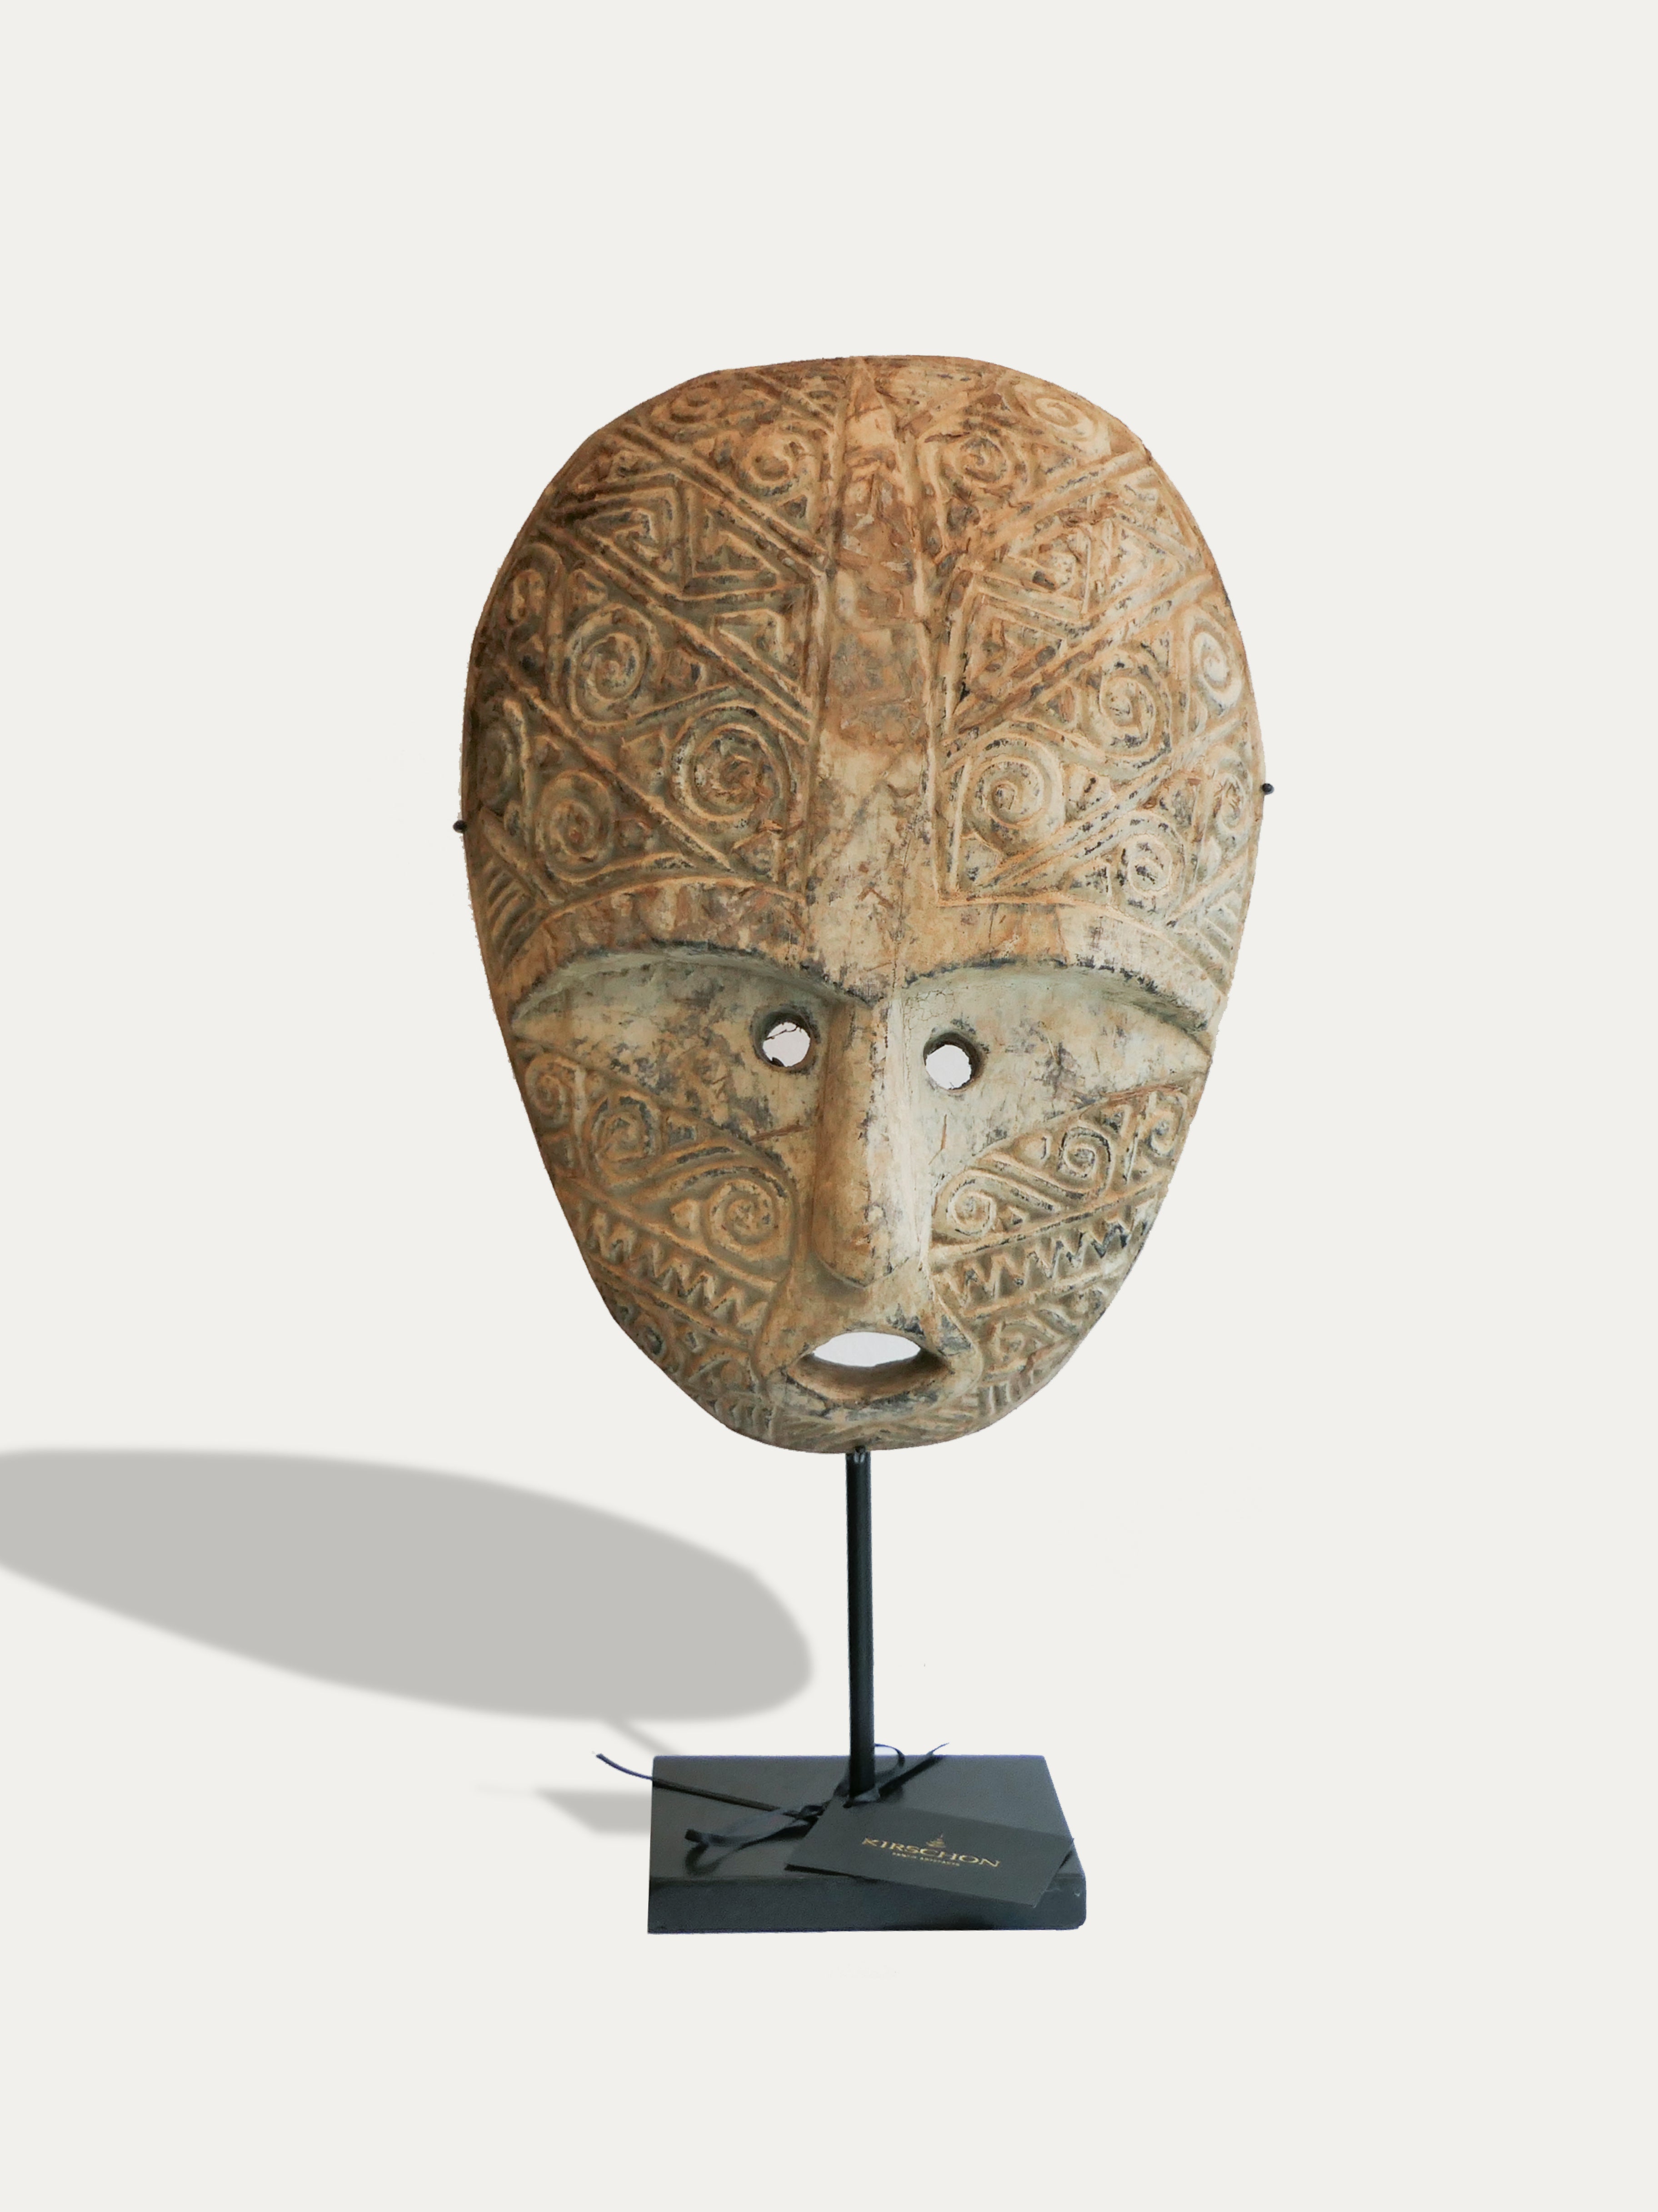 Topeng - Tribal Wooden Mask from Sumba - Asian Art from Kirschon